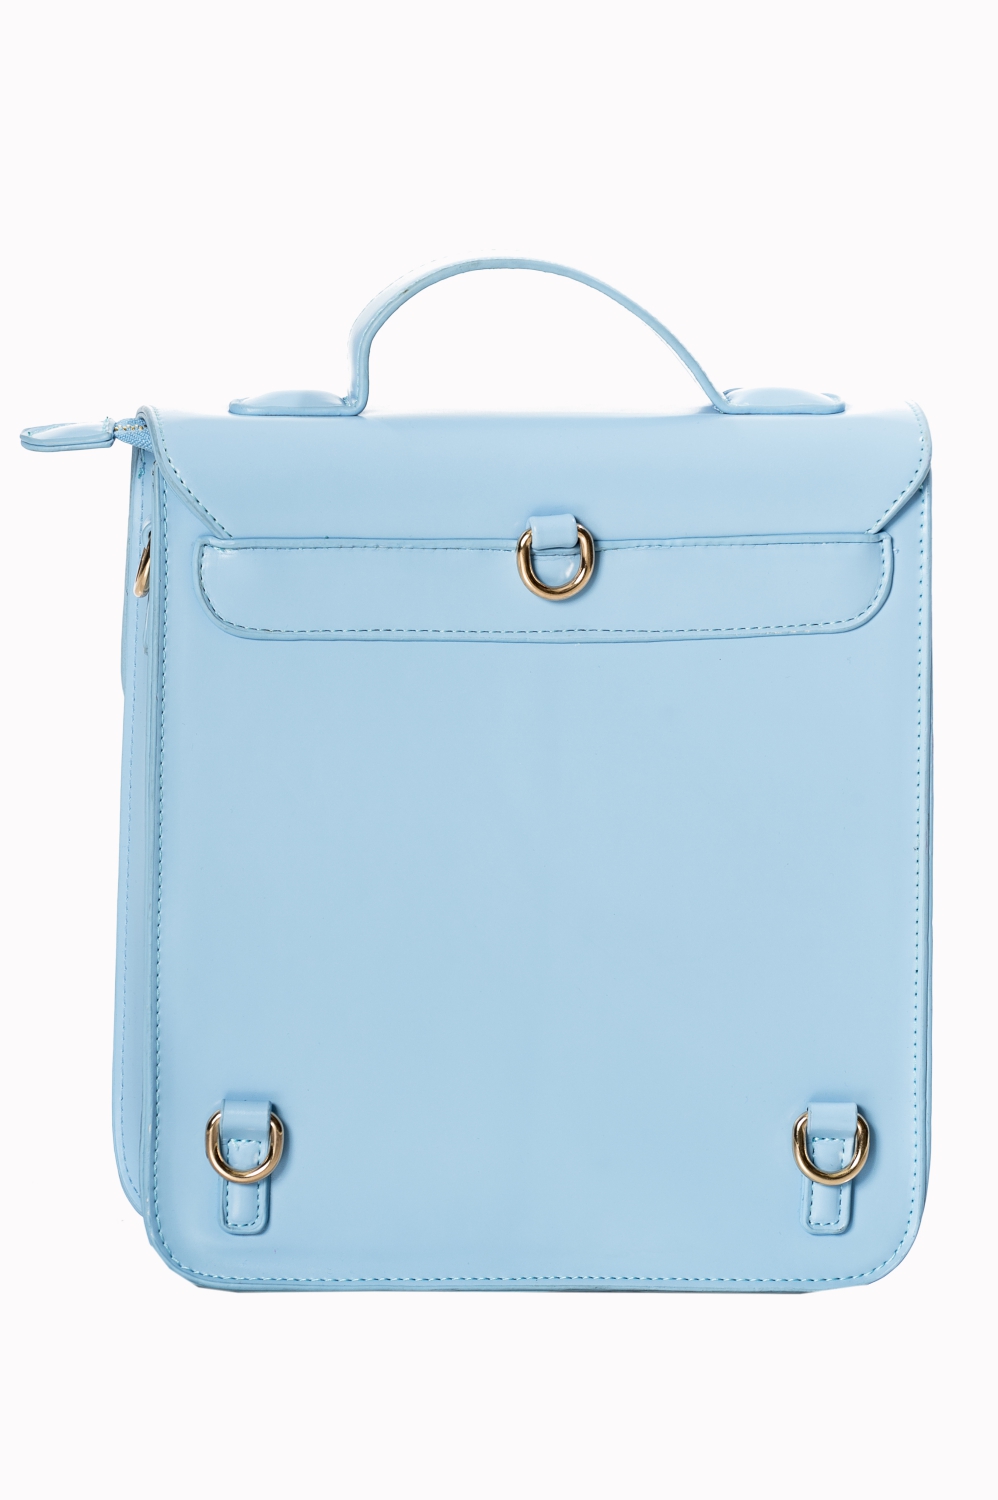 Banned Retro 60s Cohen Baby Blue Handbag